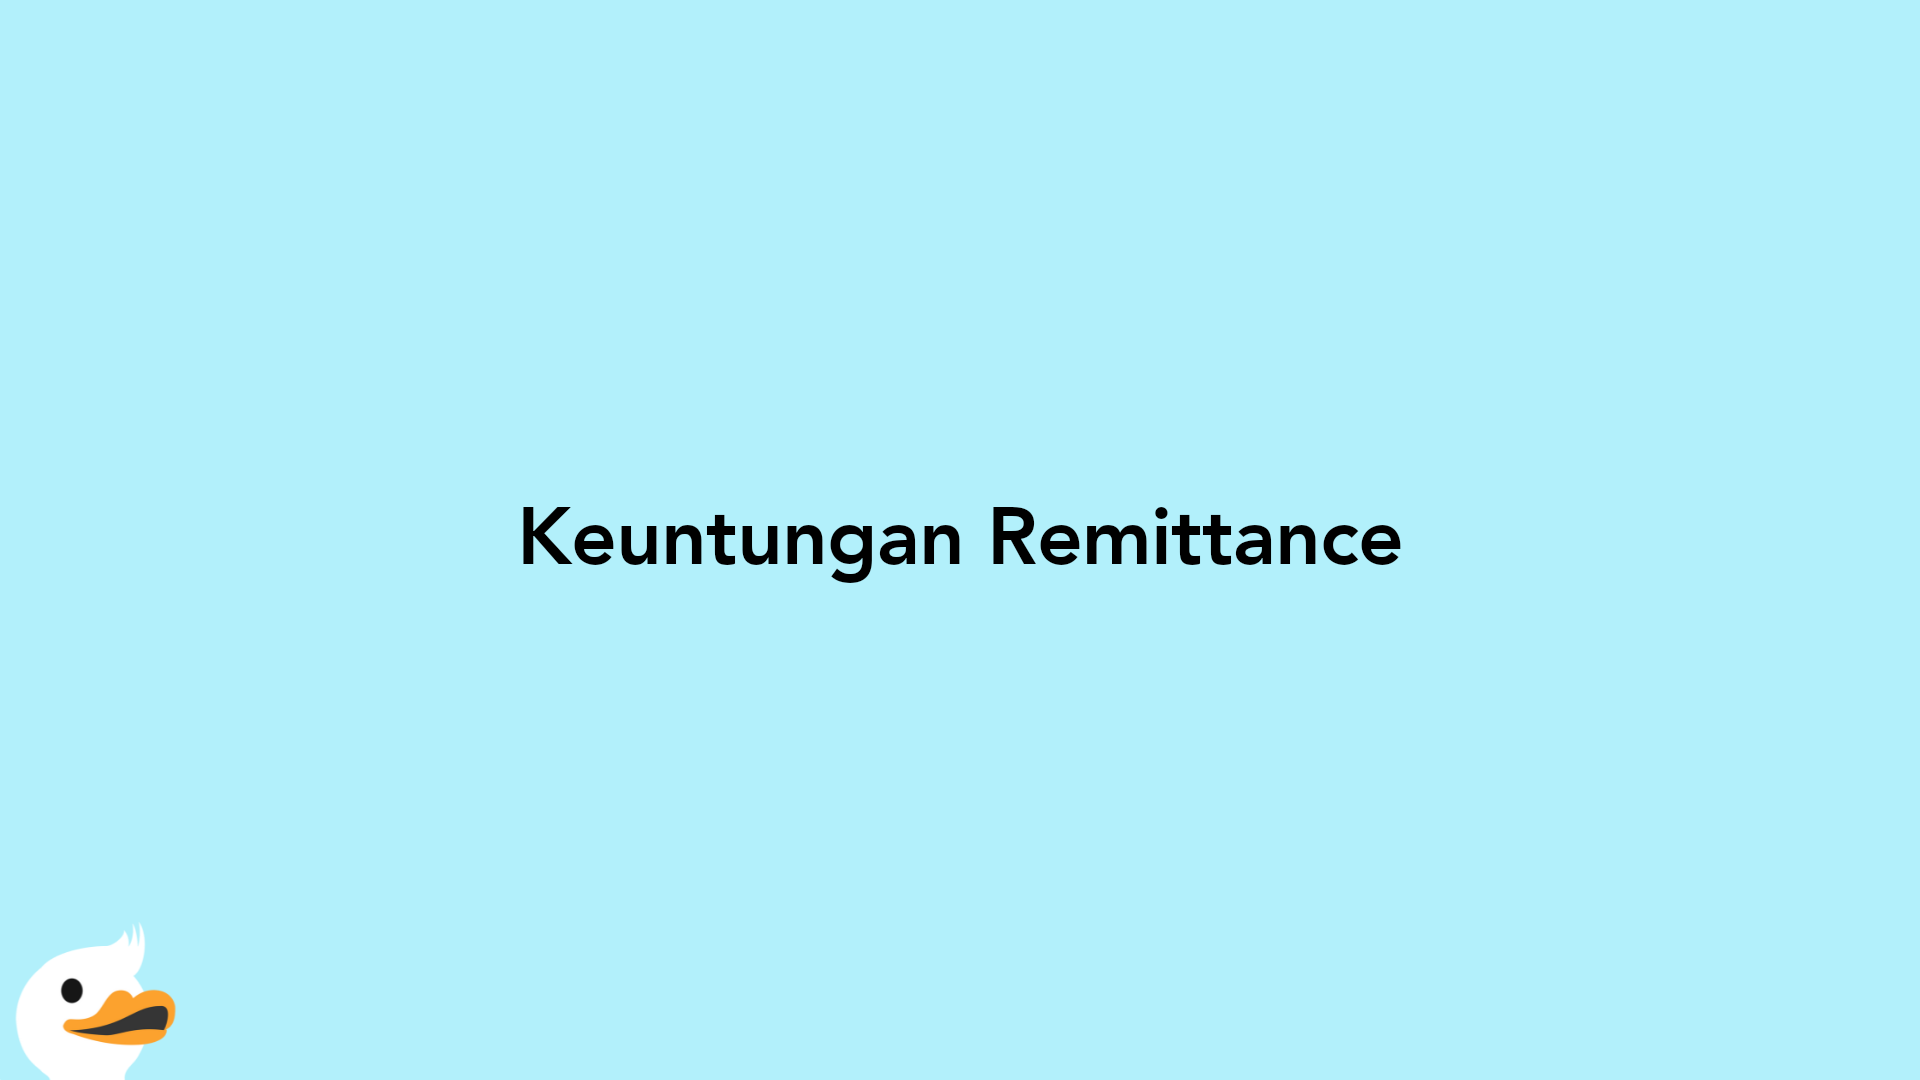 Keuntungan Remittance